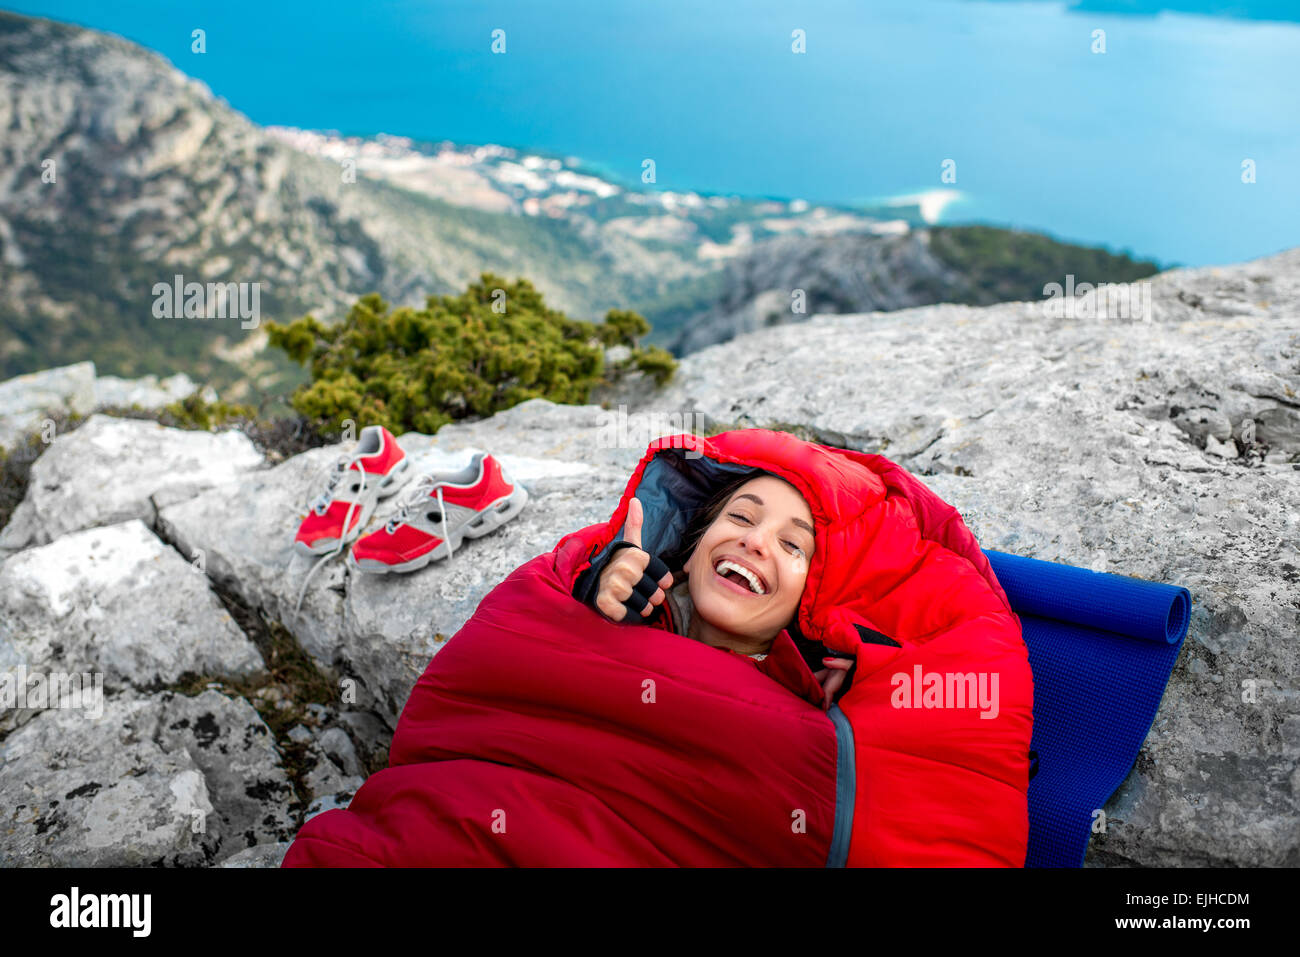 Woman in sleeping bag on the mountain Stock Photo